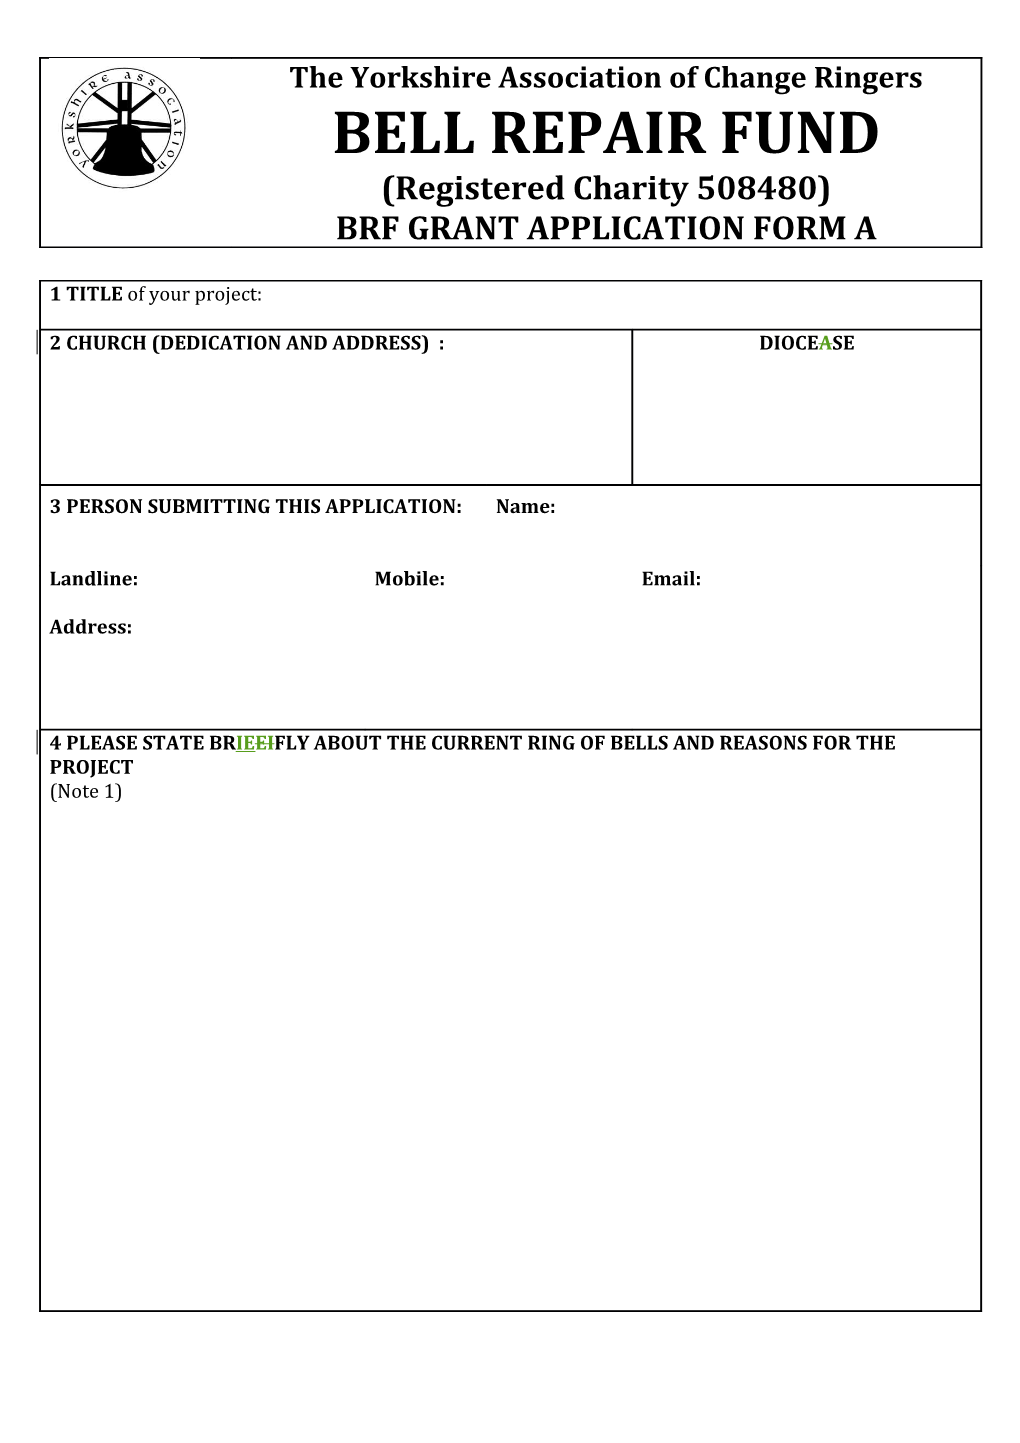 YACR EC Grant Application Form 151012